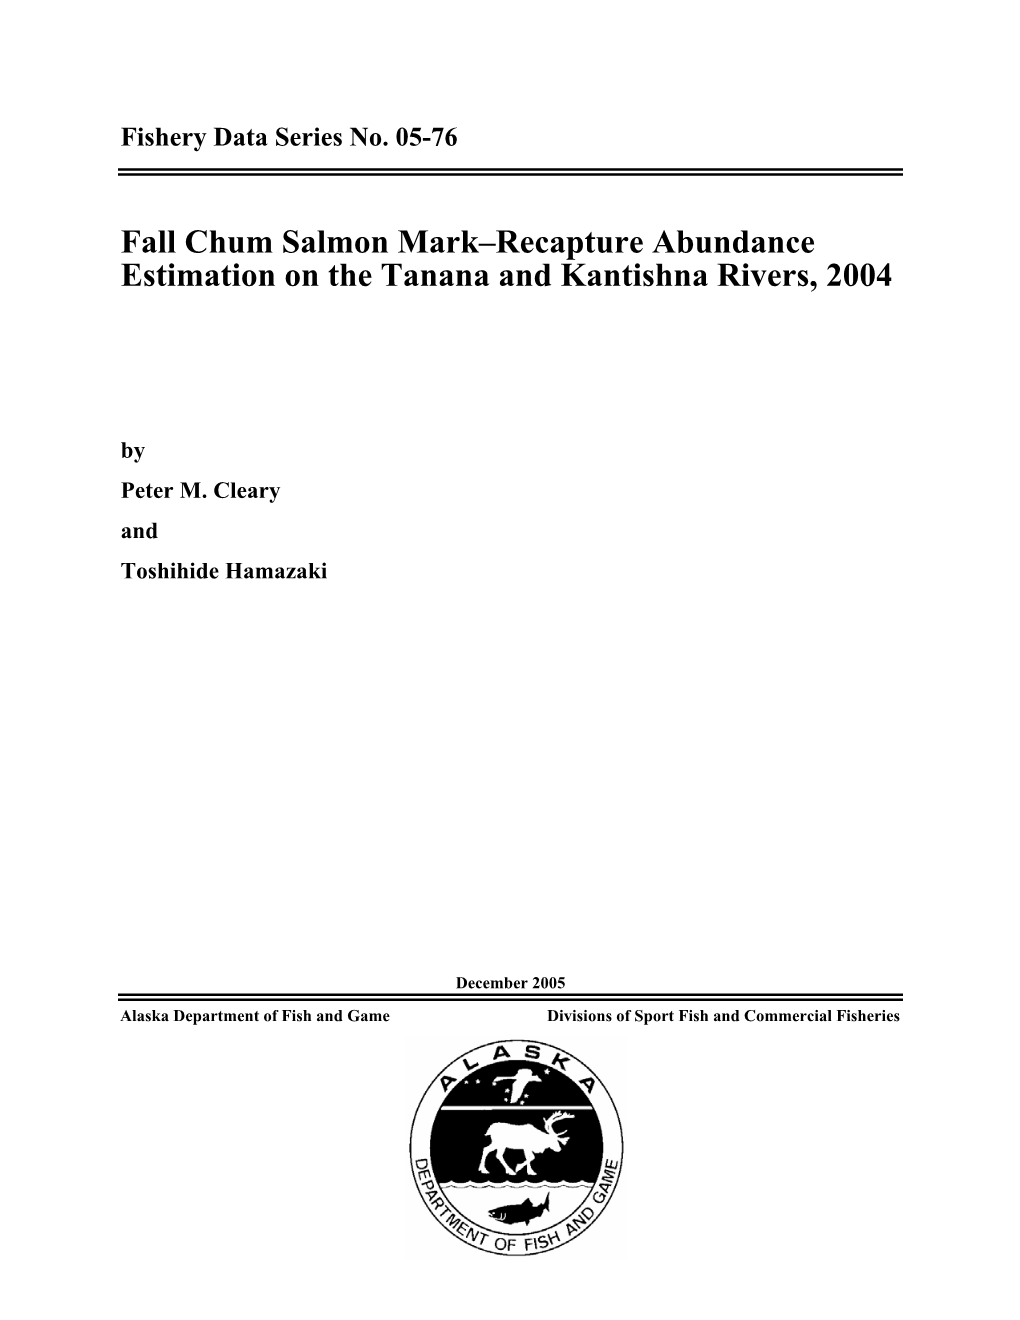 Fall Chum Salmon Mark–Recapture Abundance Estimation on the Tanana and Kantishna Rivers, 2004